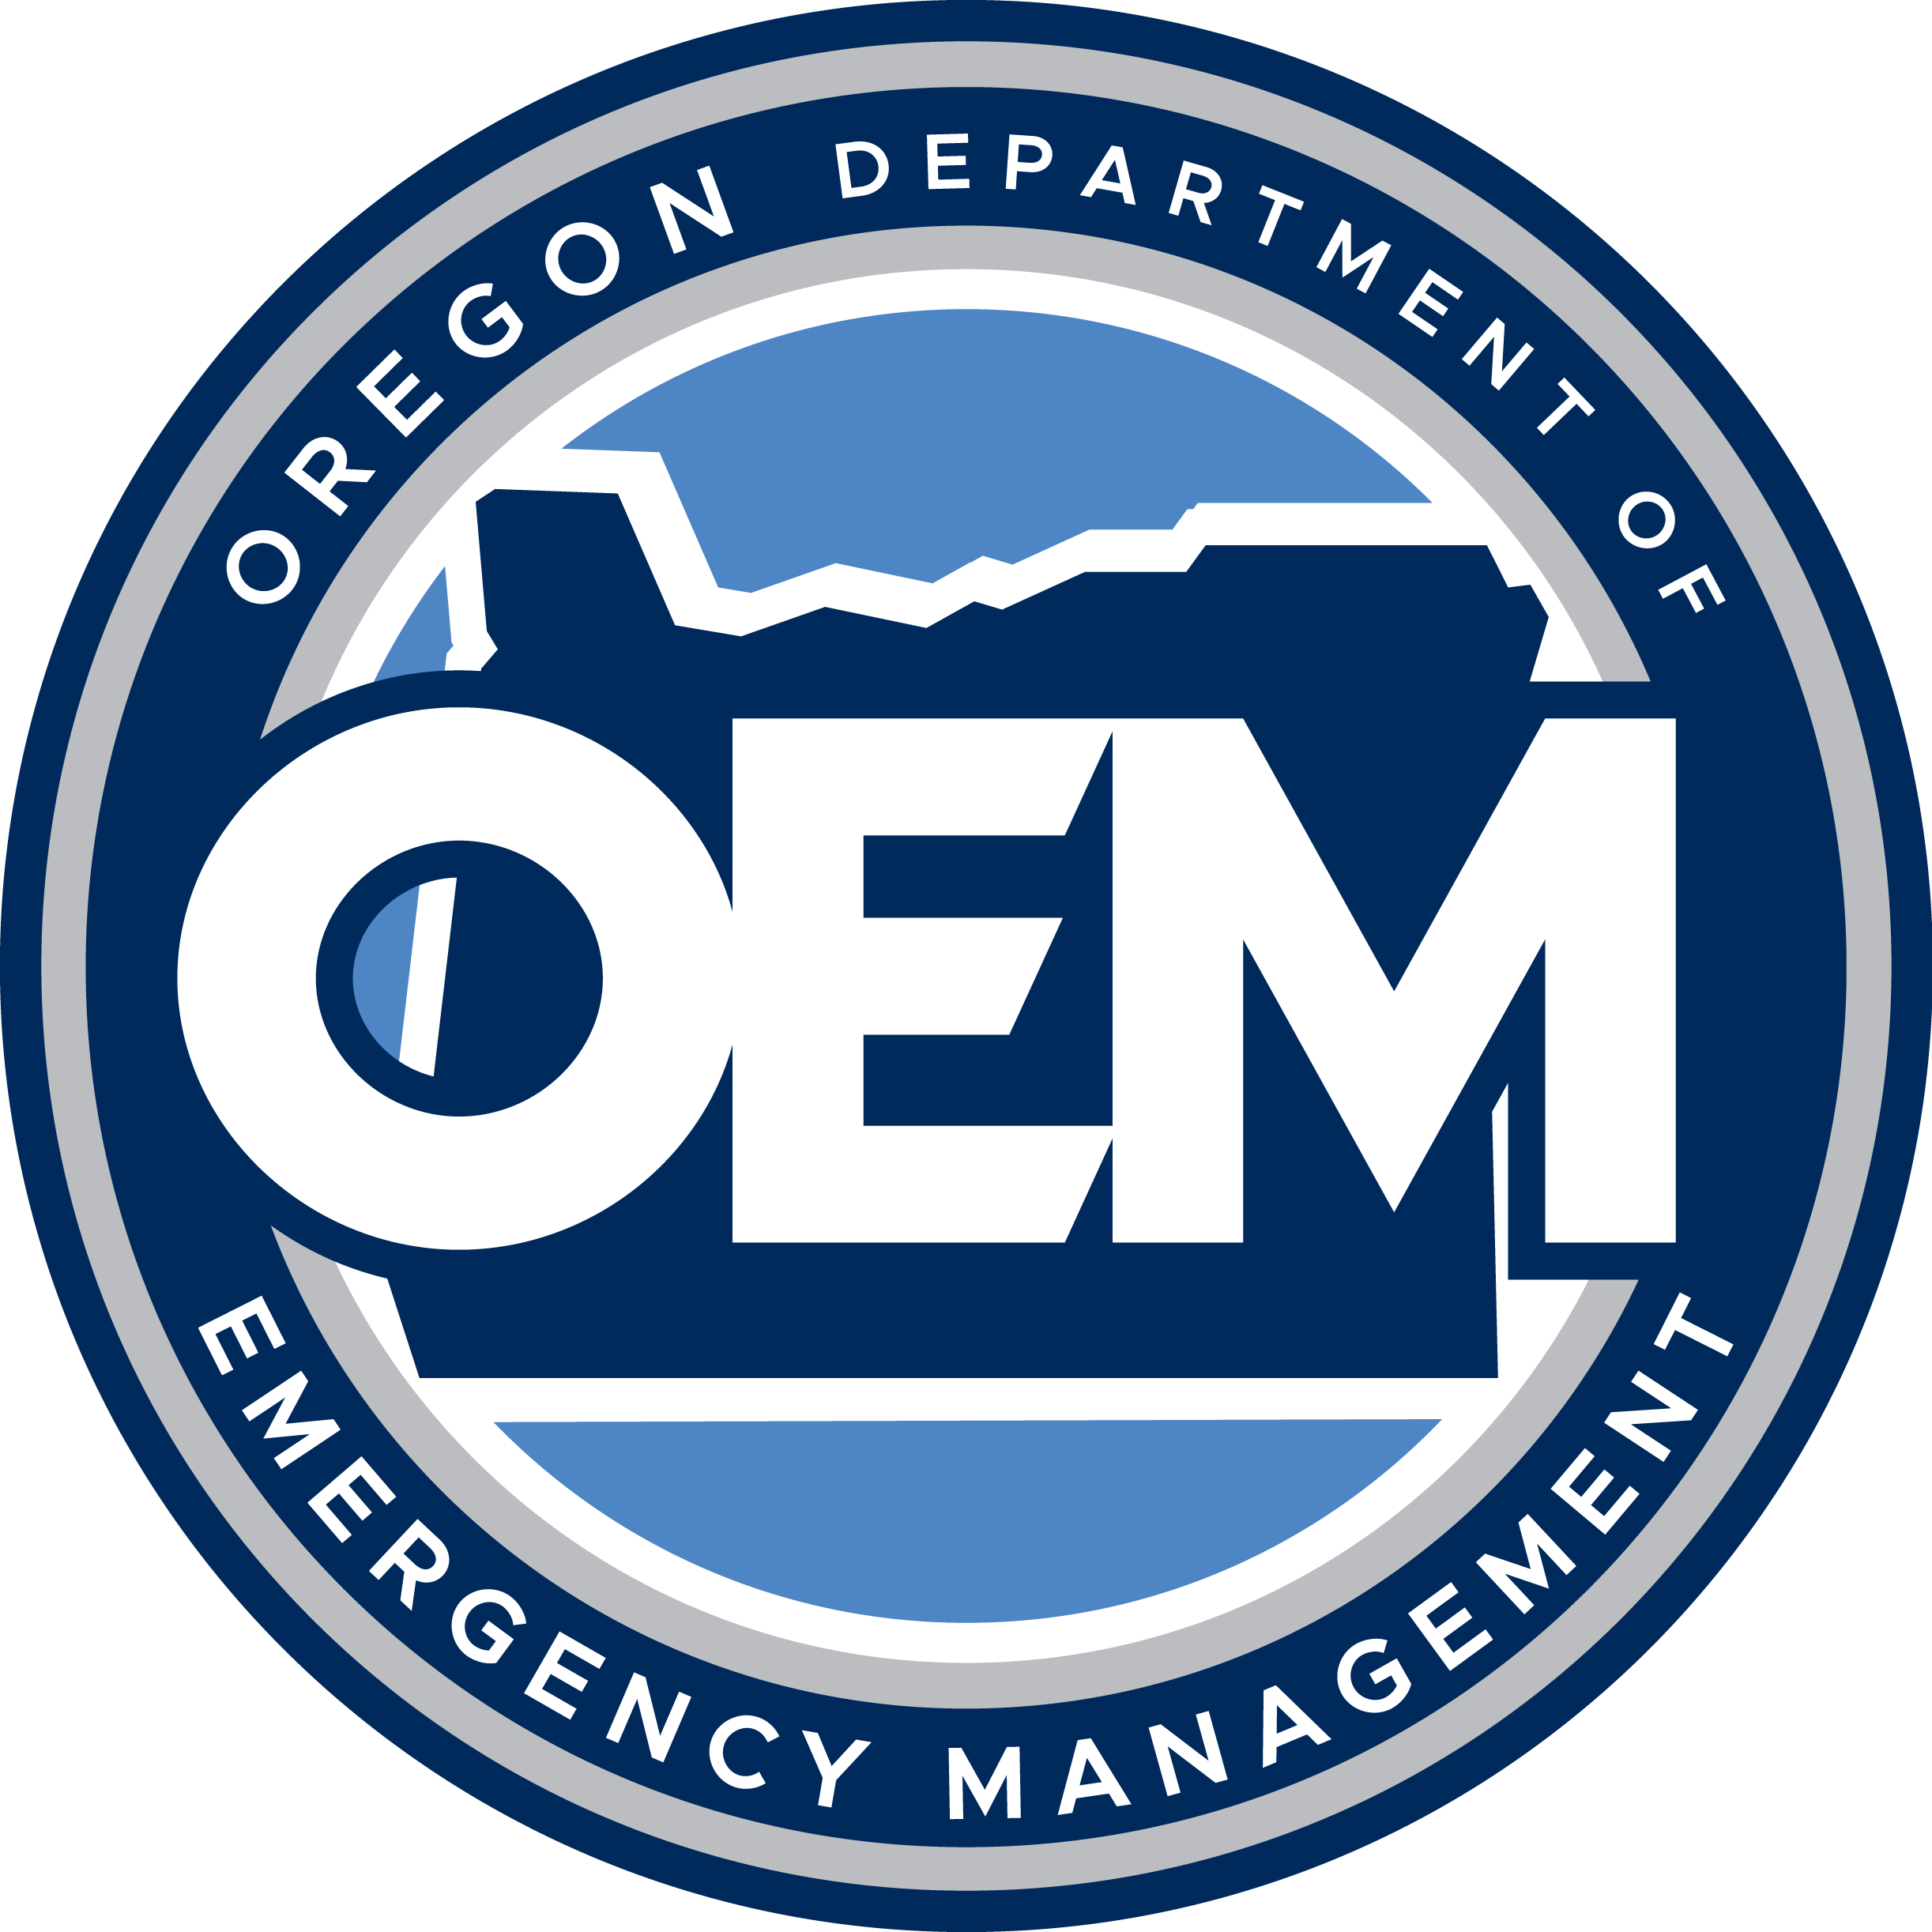 Oregon Department of Emergency Management news via